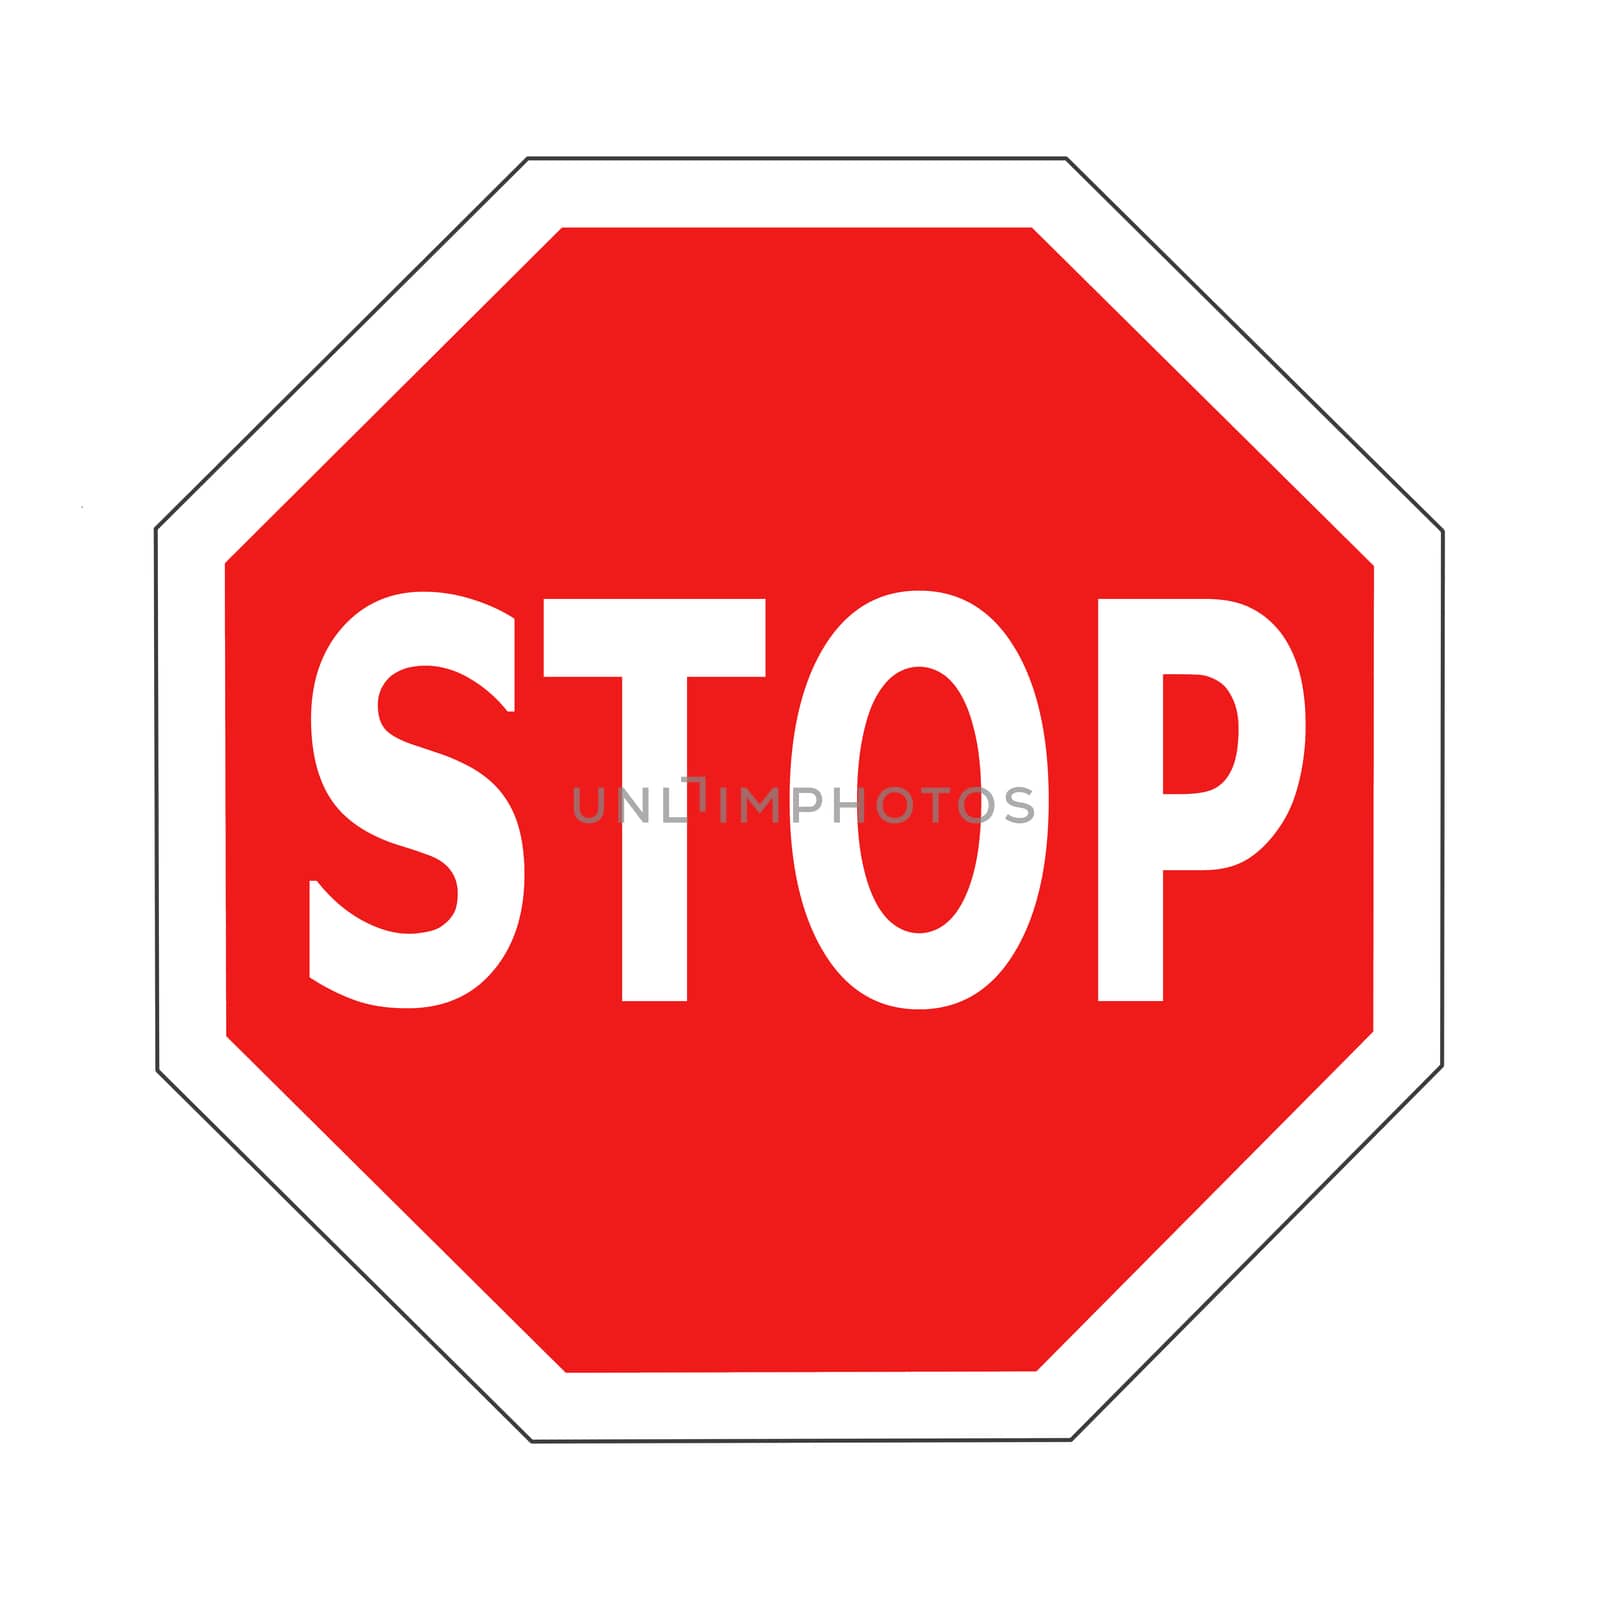 Traffic stop sign by aldorado